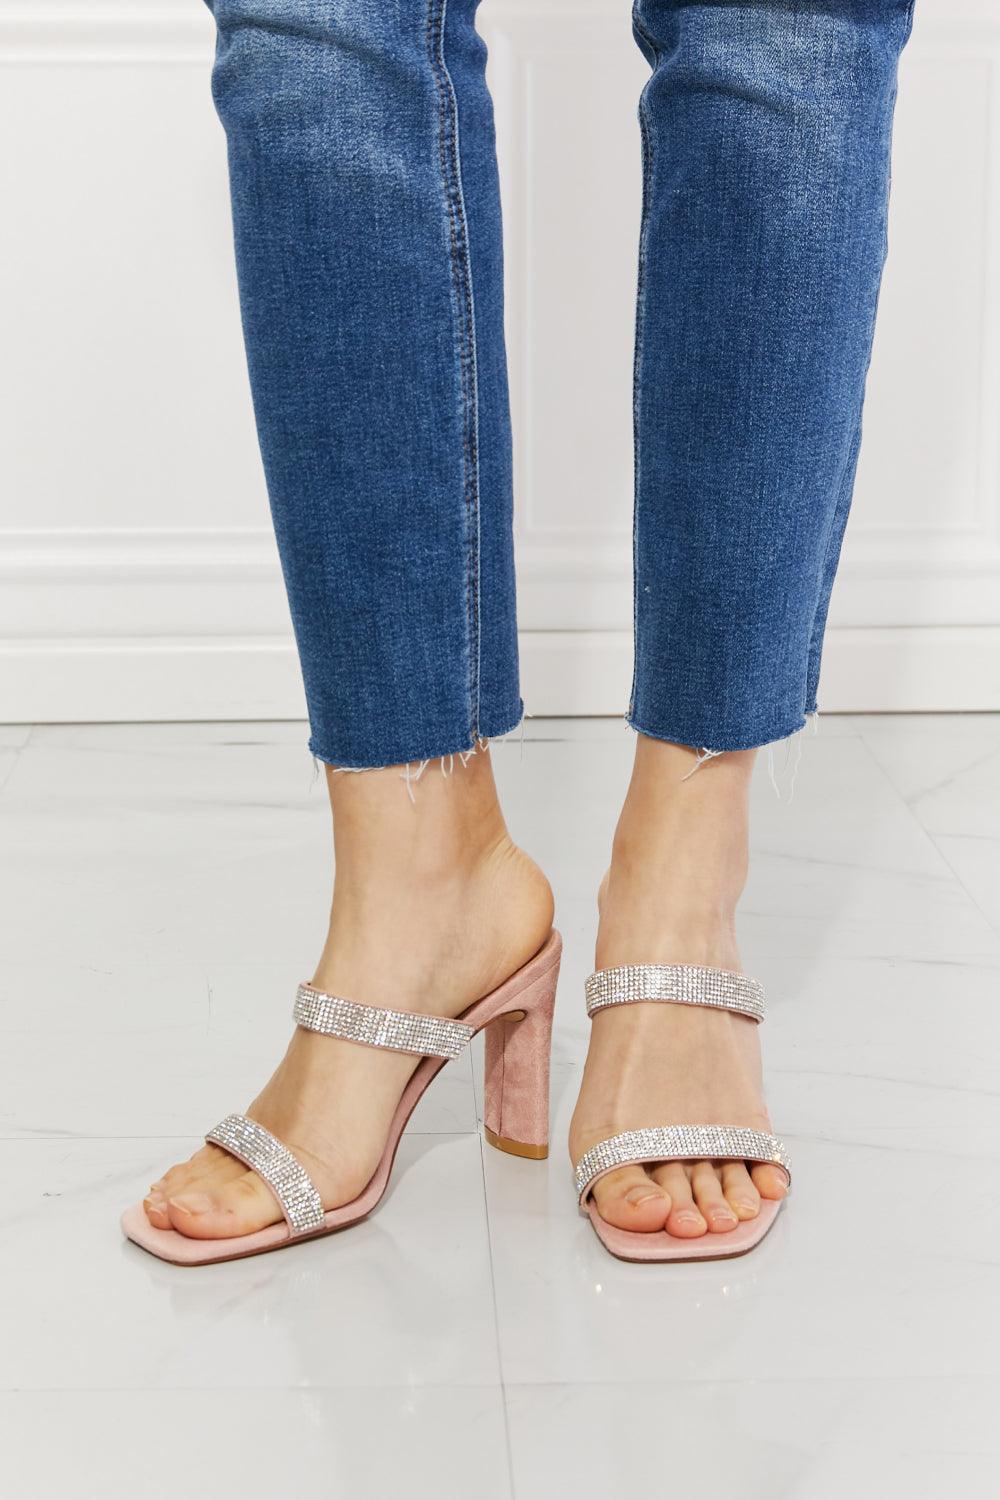 MMShoes Leave A Little Sparkle Rhinestone Block Heel Sandal in Pink - Closet of Ren